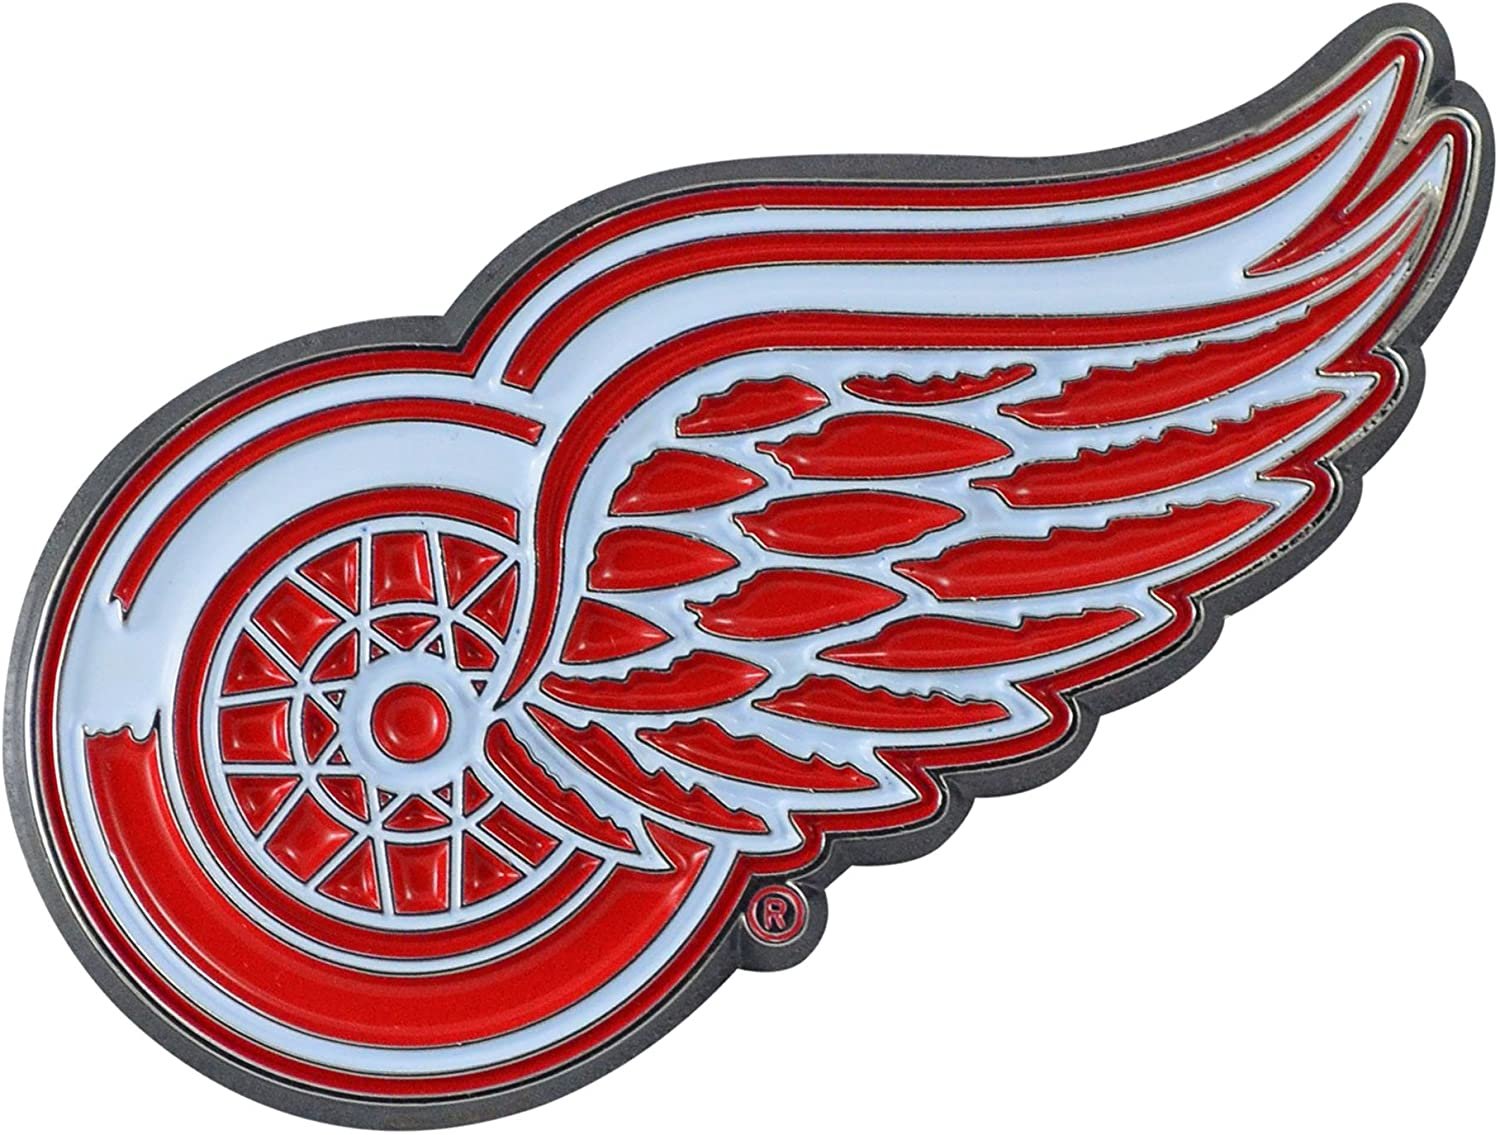 Detroit Red Wings Premium Solid Metal Raised Auto Emblem, Team Color, Shape Cut, Adhesive Backing